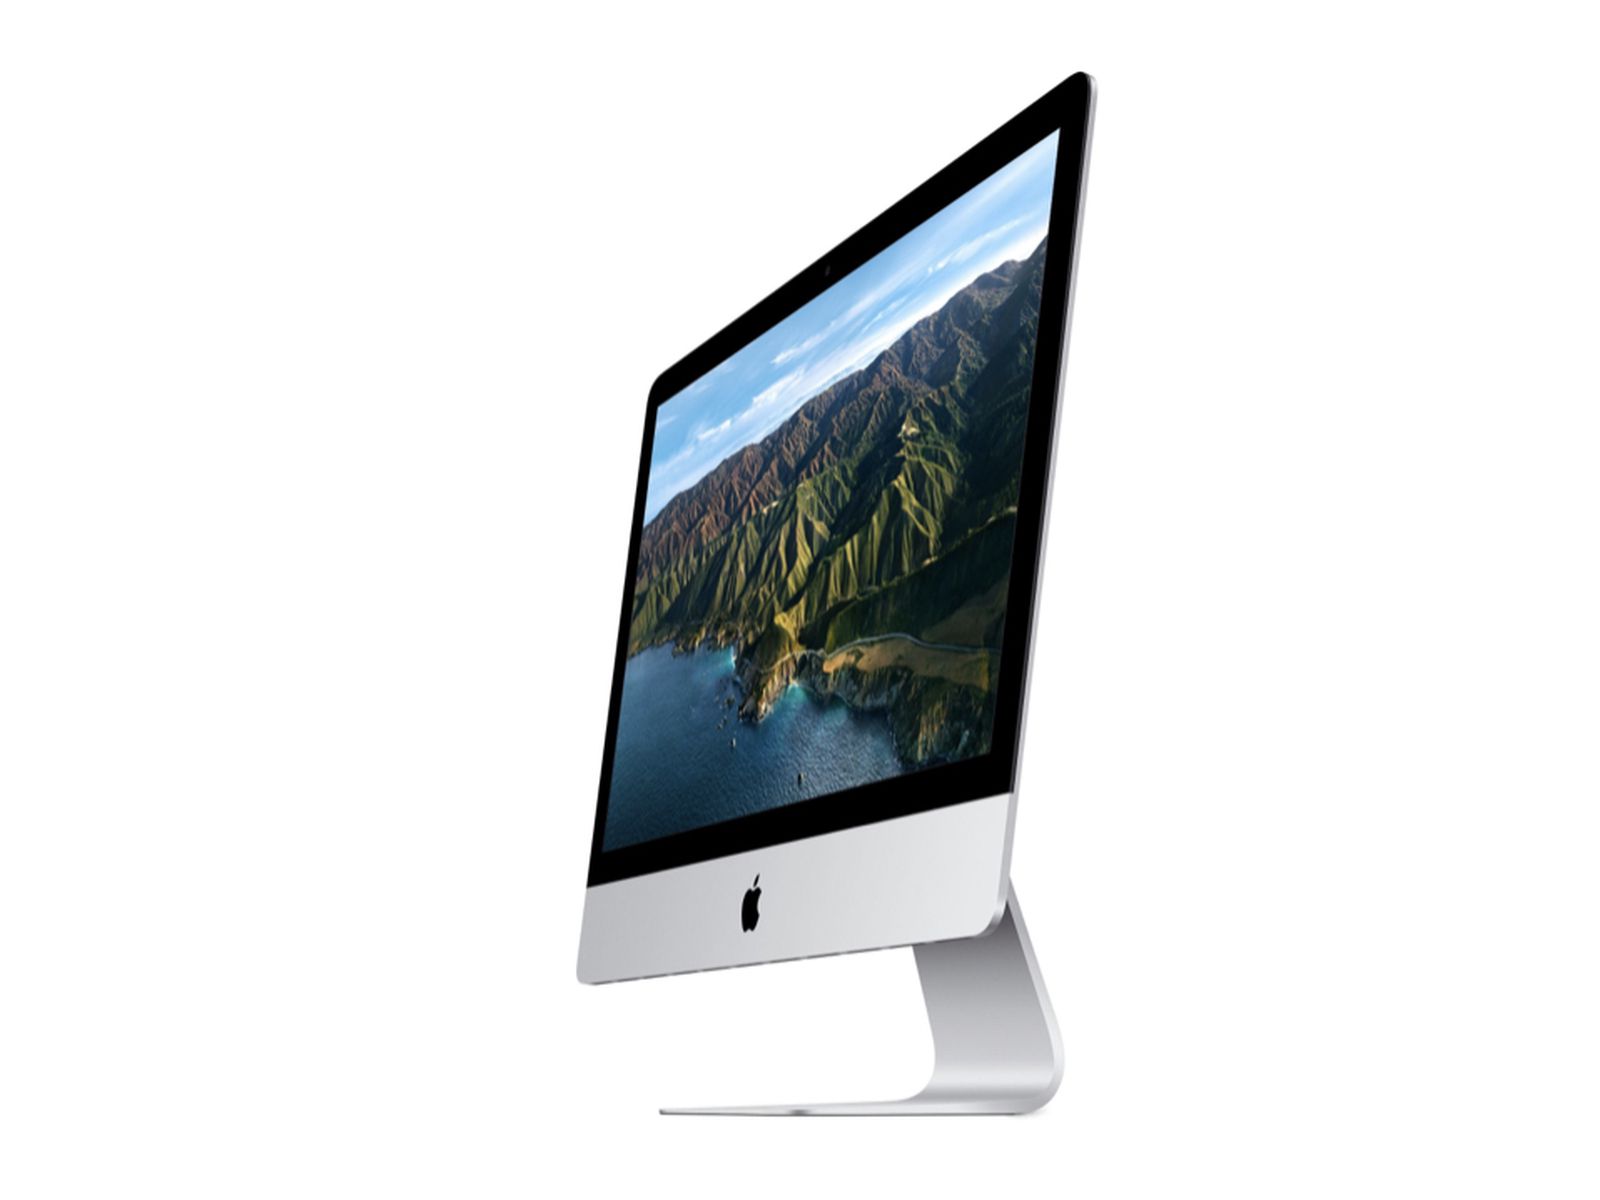 Apple Discontinues Intel-Based 21.5-Inch iMac - MacRumors